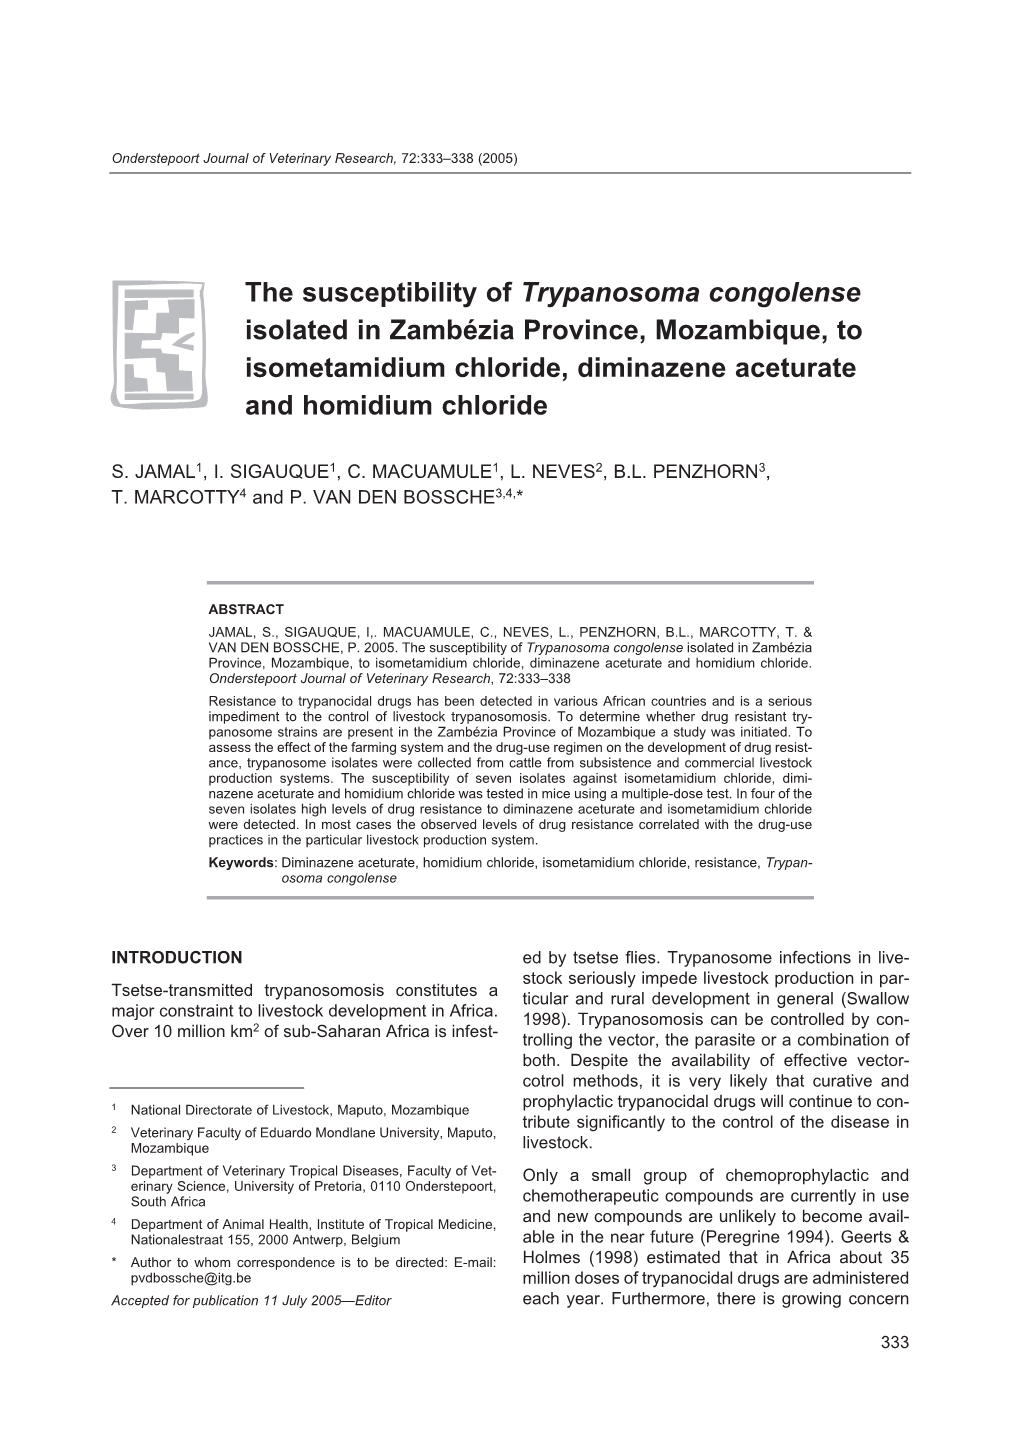 The Susceptibility of Trypanosoma Congolense Isolated in Zambézia Province, Mozambique, to Isometamidium Chloride, Diminazene Aceturate and Homidium Chloride